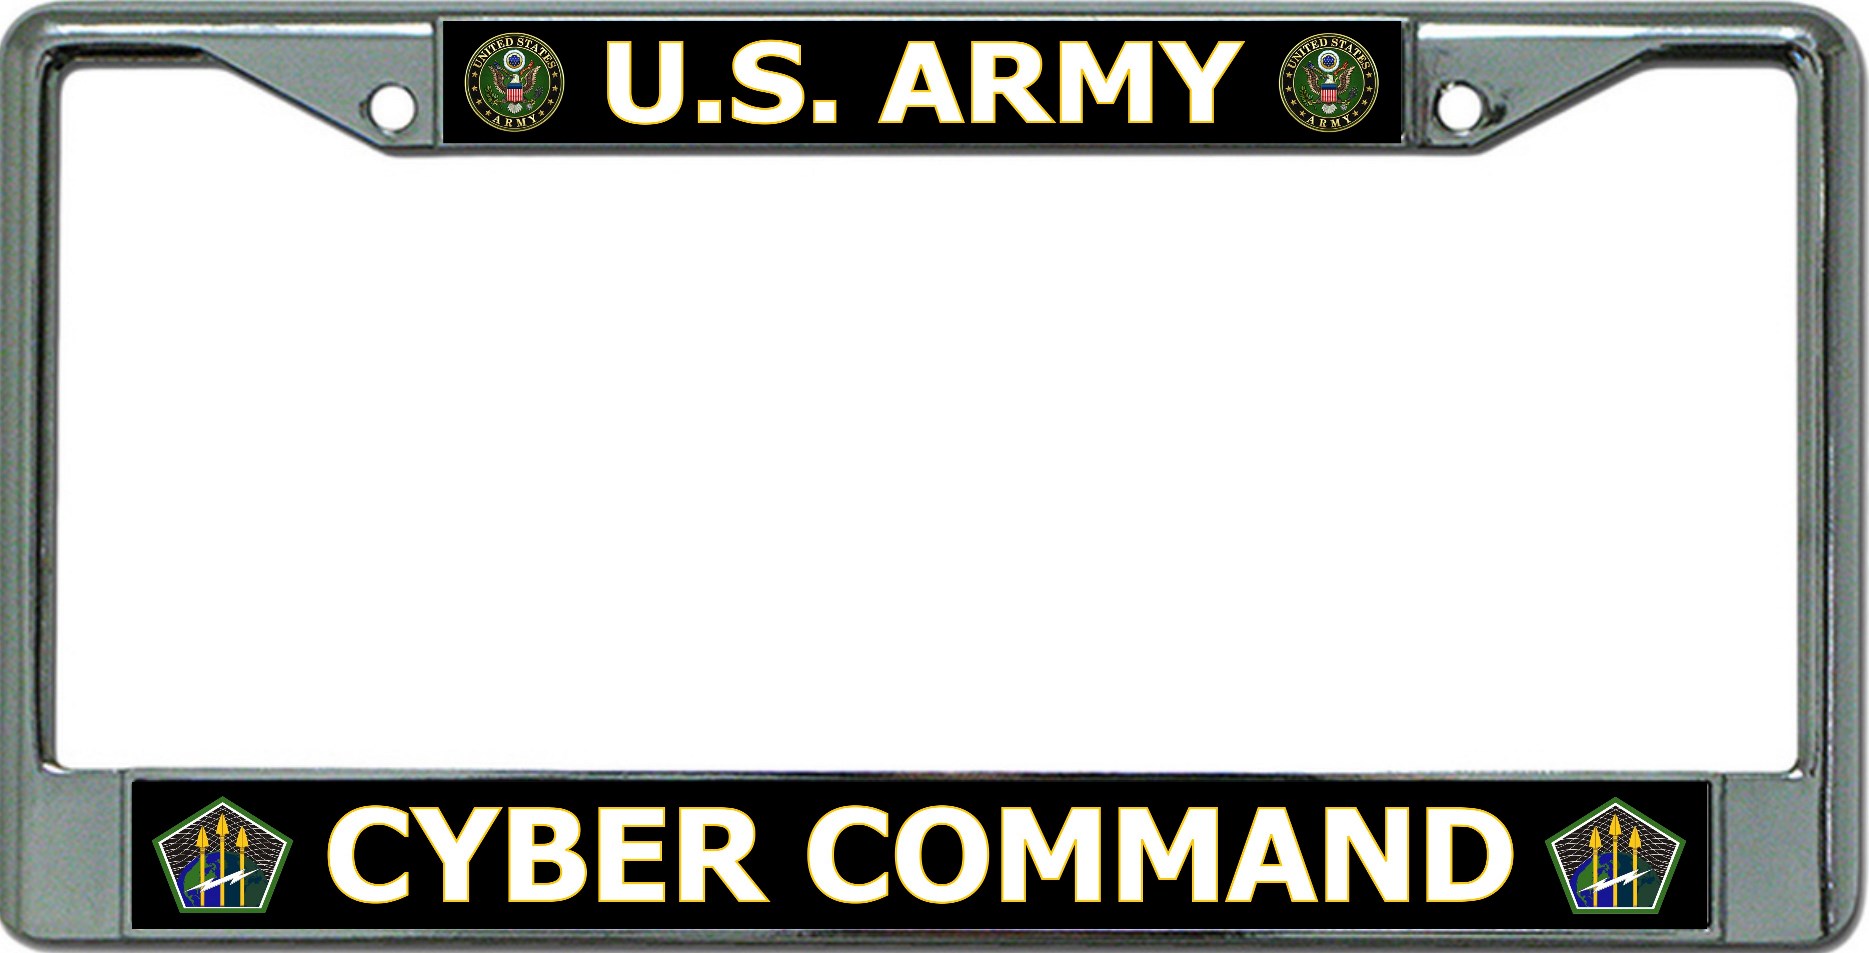 U.S. Army Cyber Command Chrome License Plate FRAME